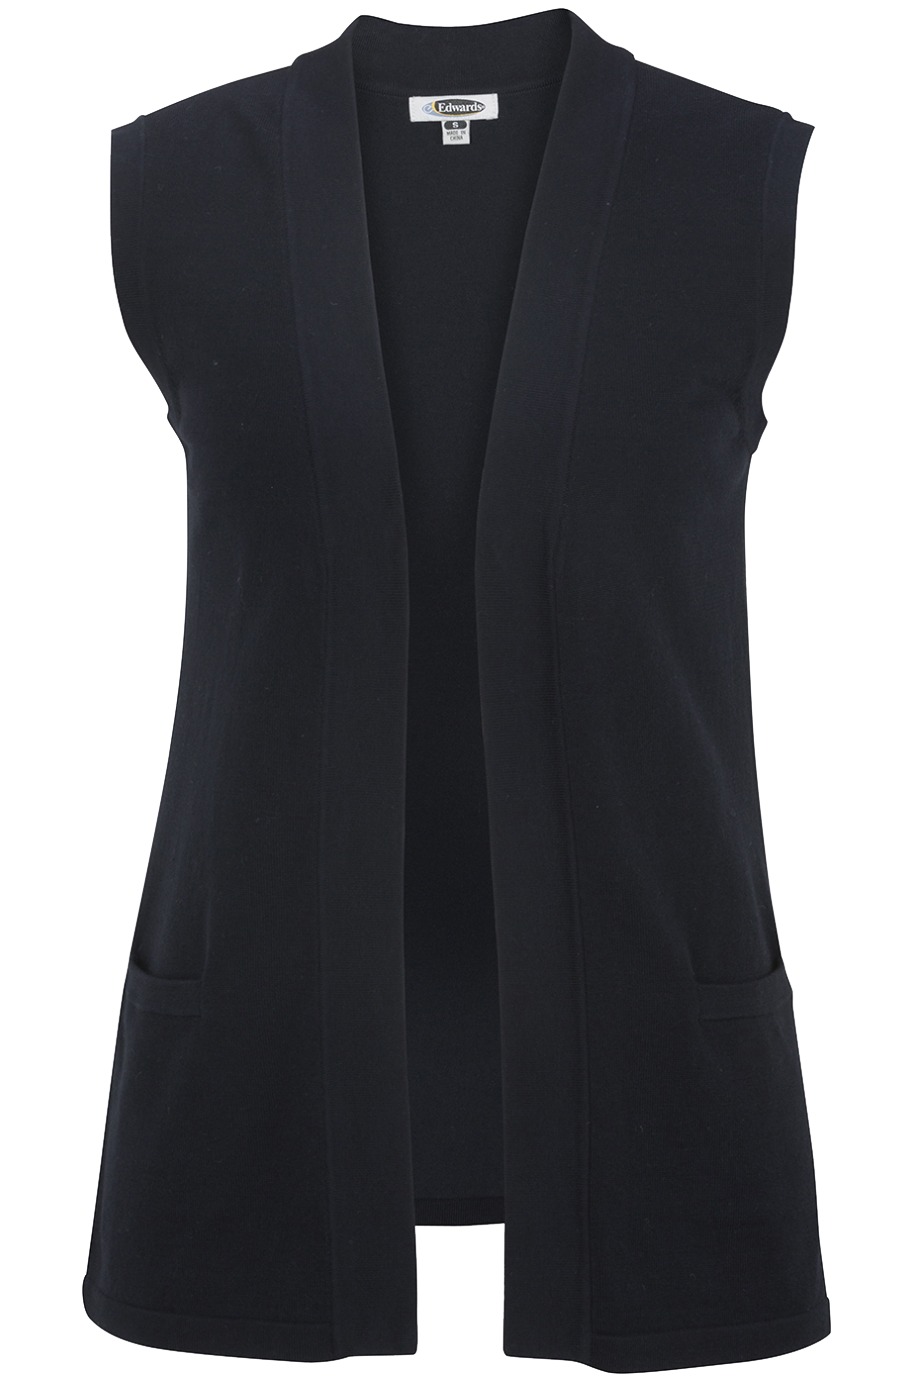 Edwards Garment 7026 - Ladies' Open Cardigan Vest